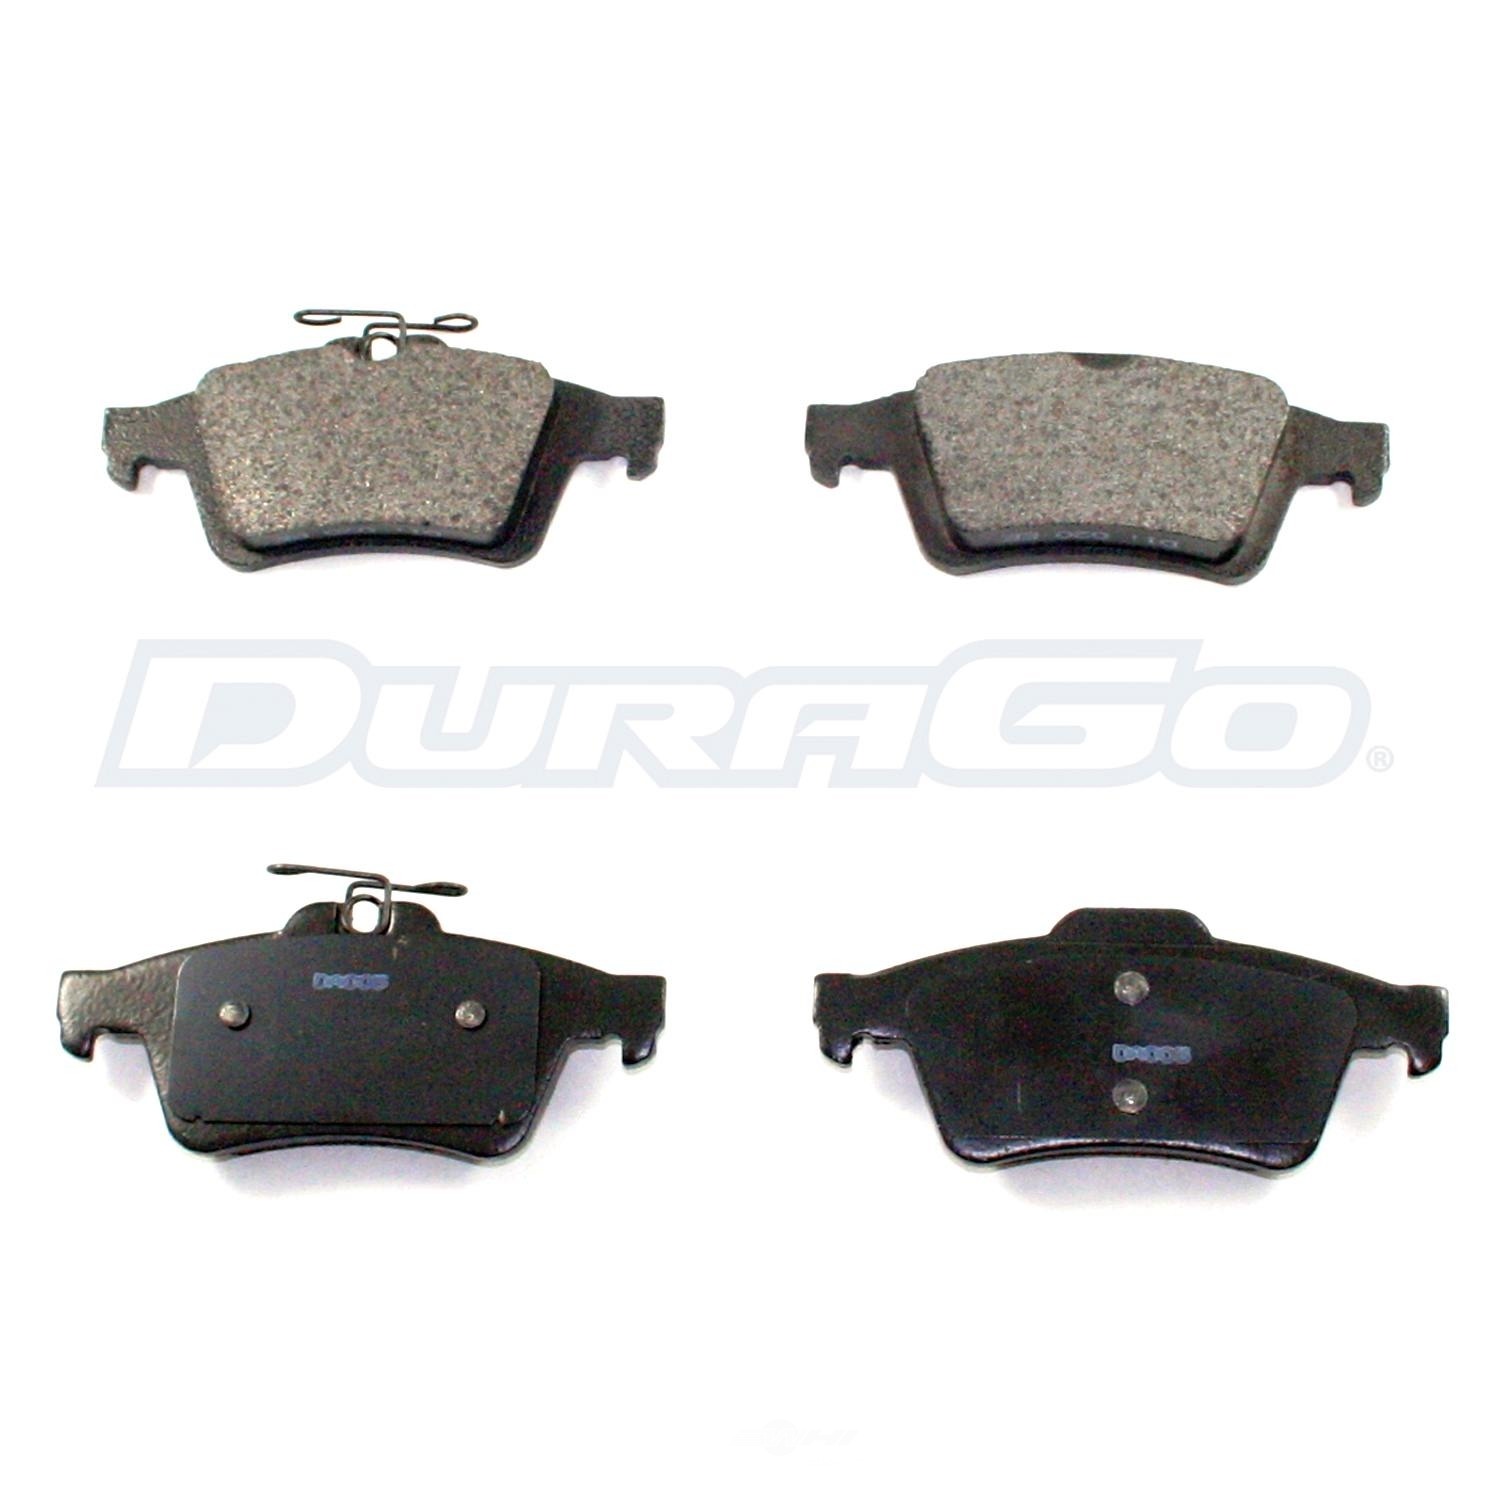 DURAGO - Disc Brake Pad (Rear) - D48 BP1095MS